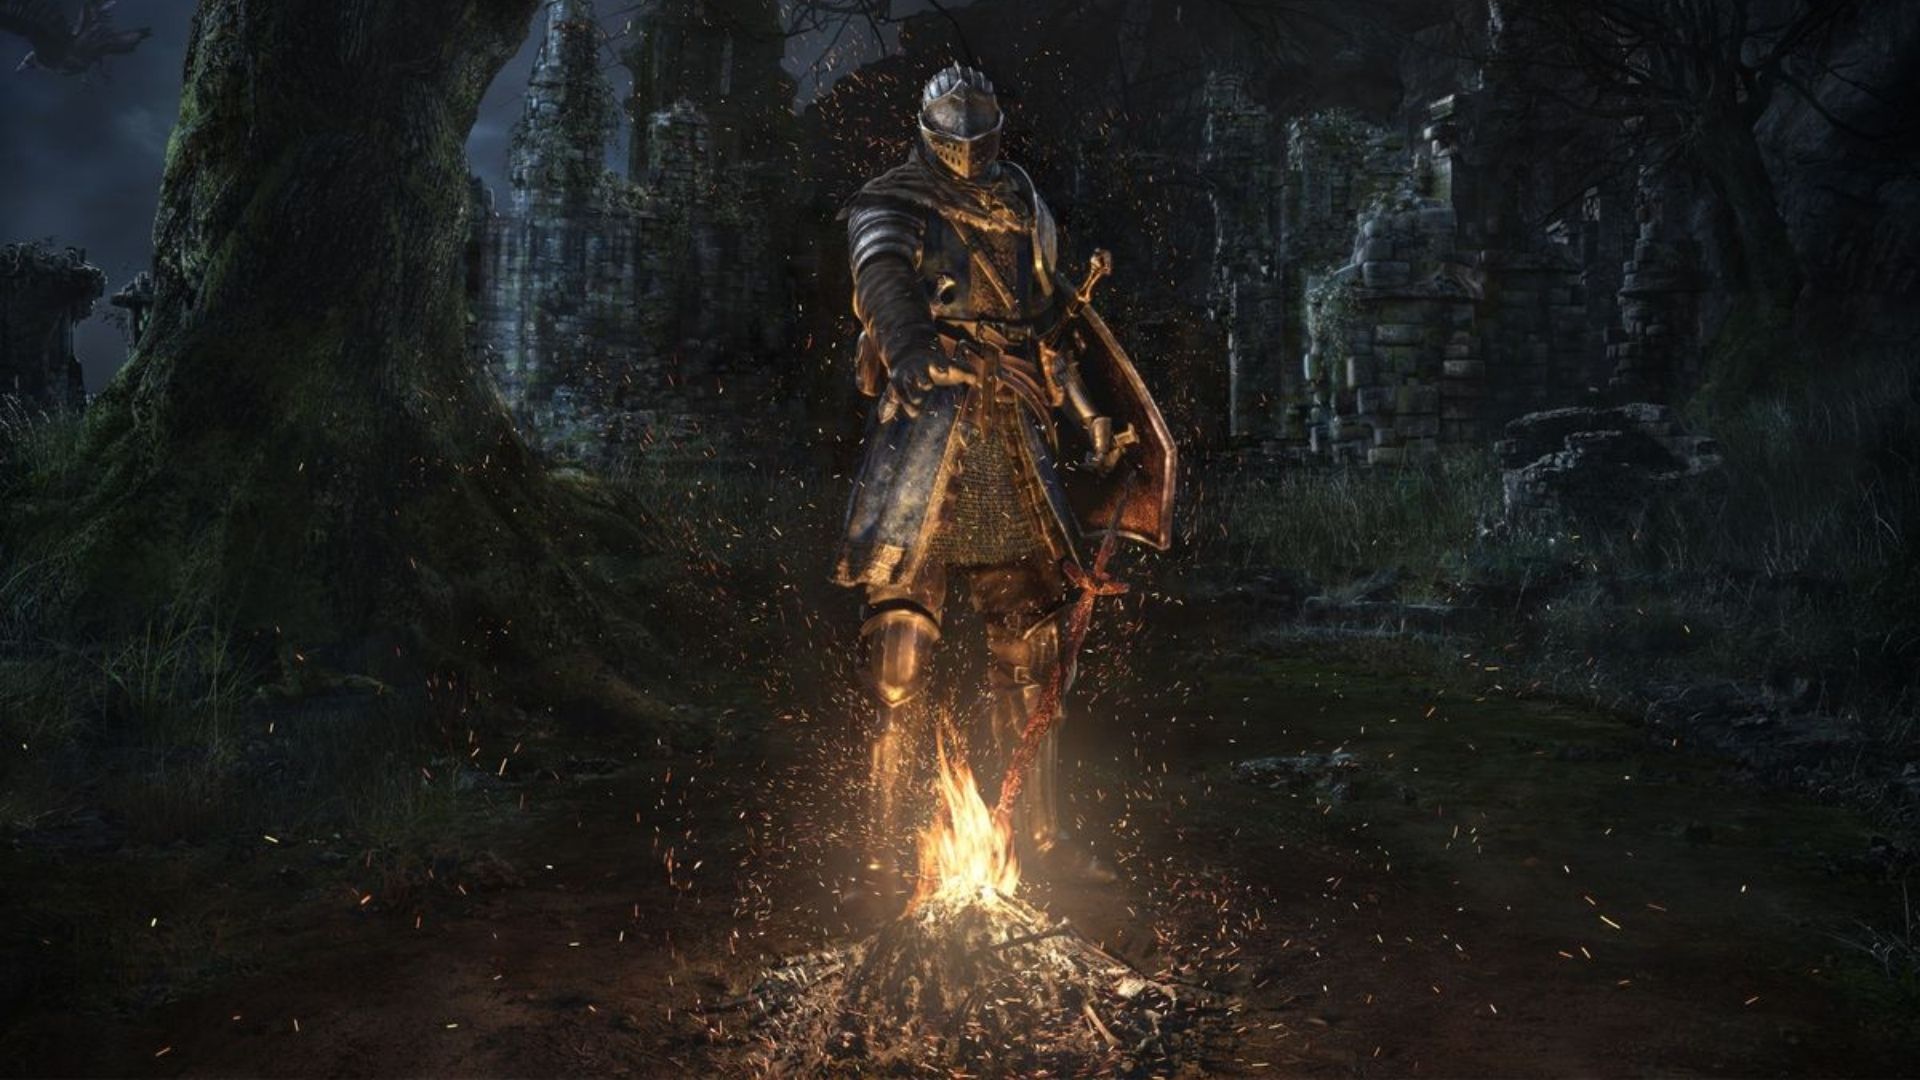 Best knight games: Dark Souls. Image shows a knight lighting a bonfire